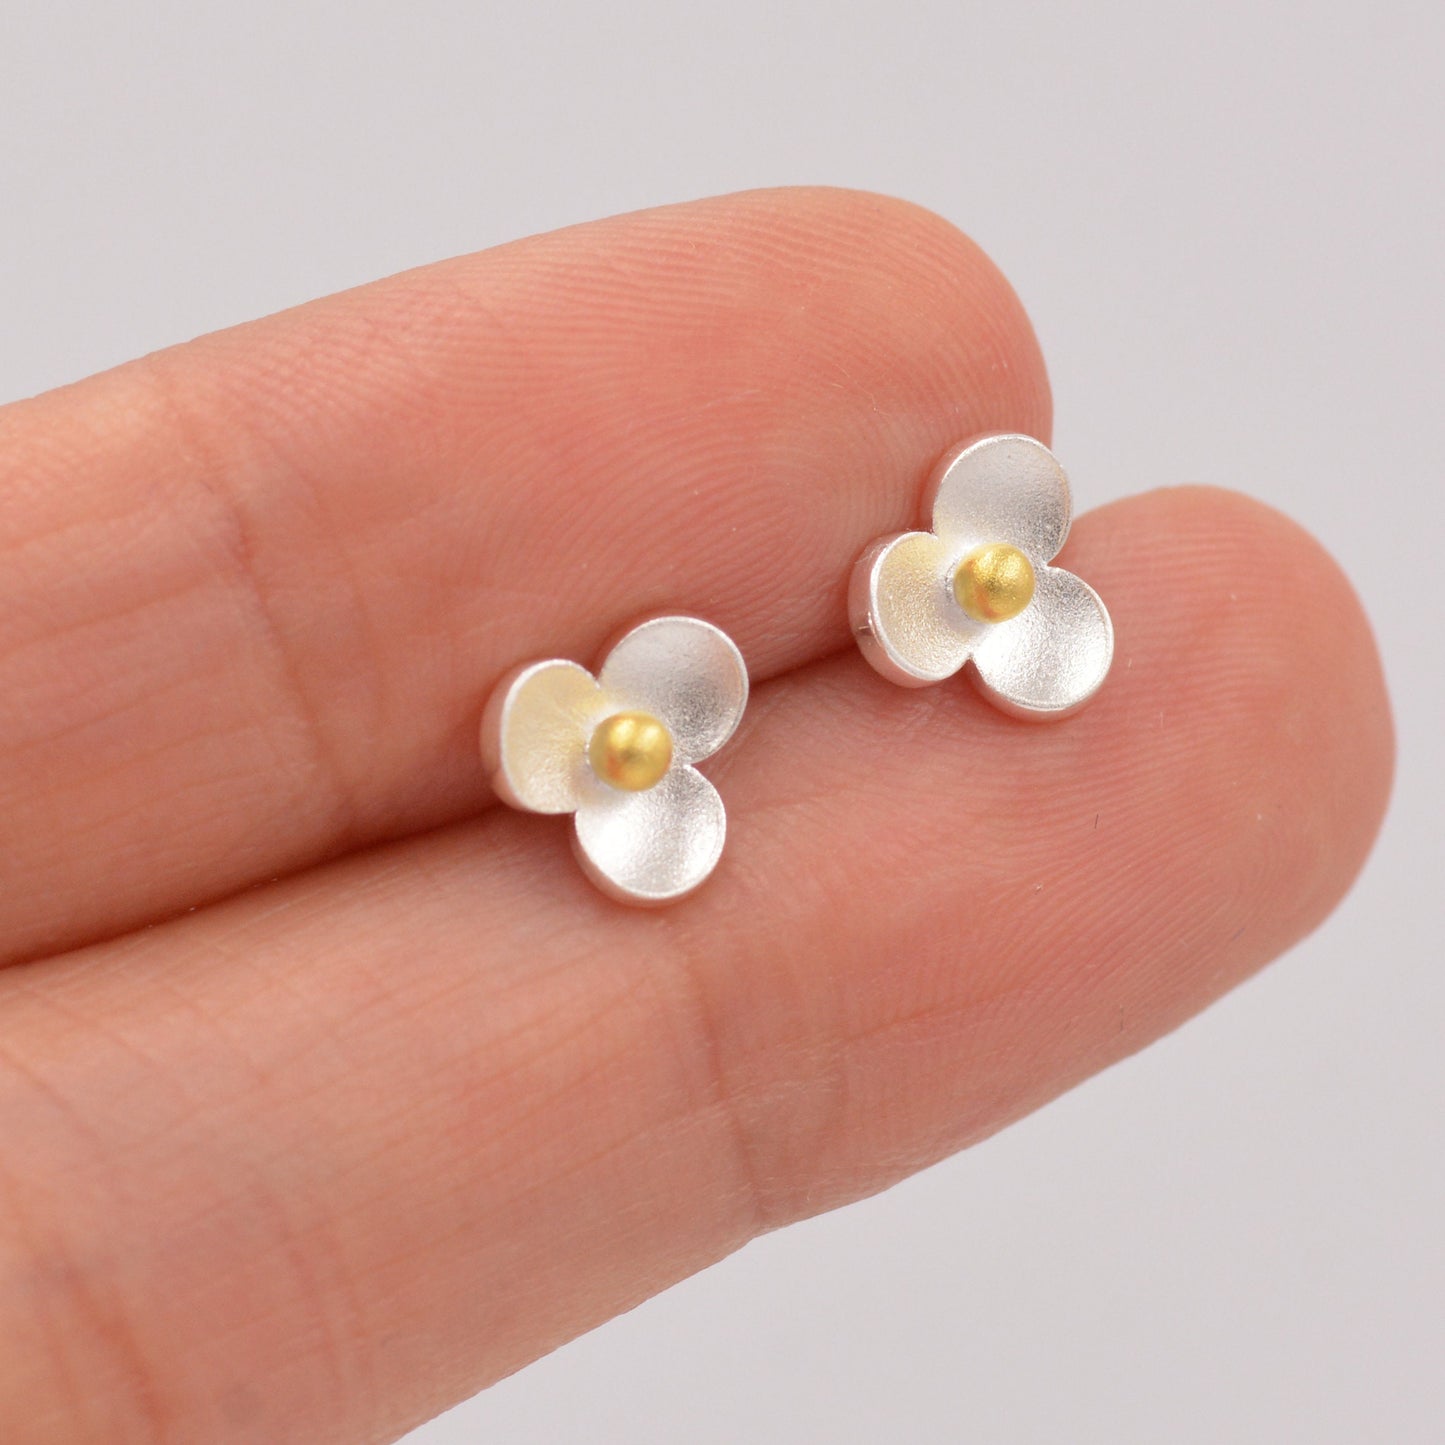 Flower stud earrings in Sterling Silver, Three Petal Flower Earrings, Blossom Stud, Nature Inspired